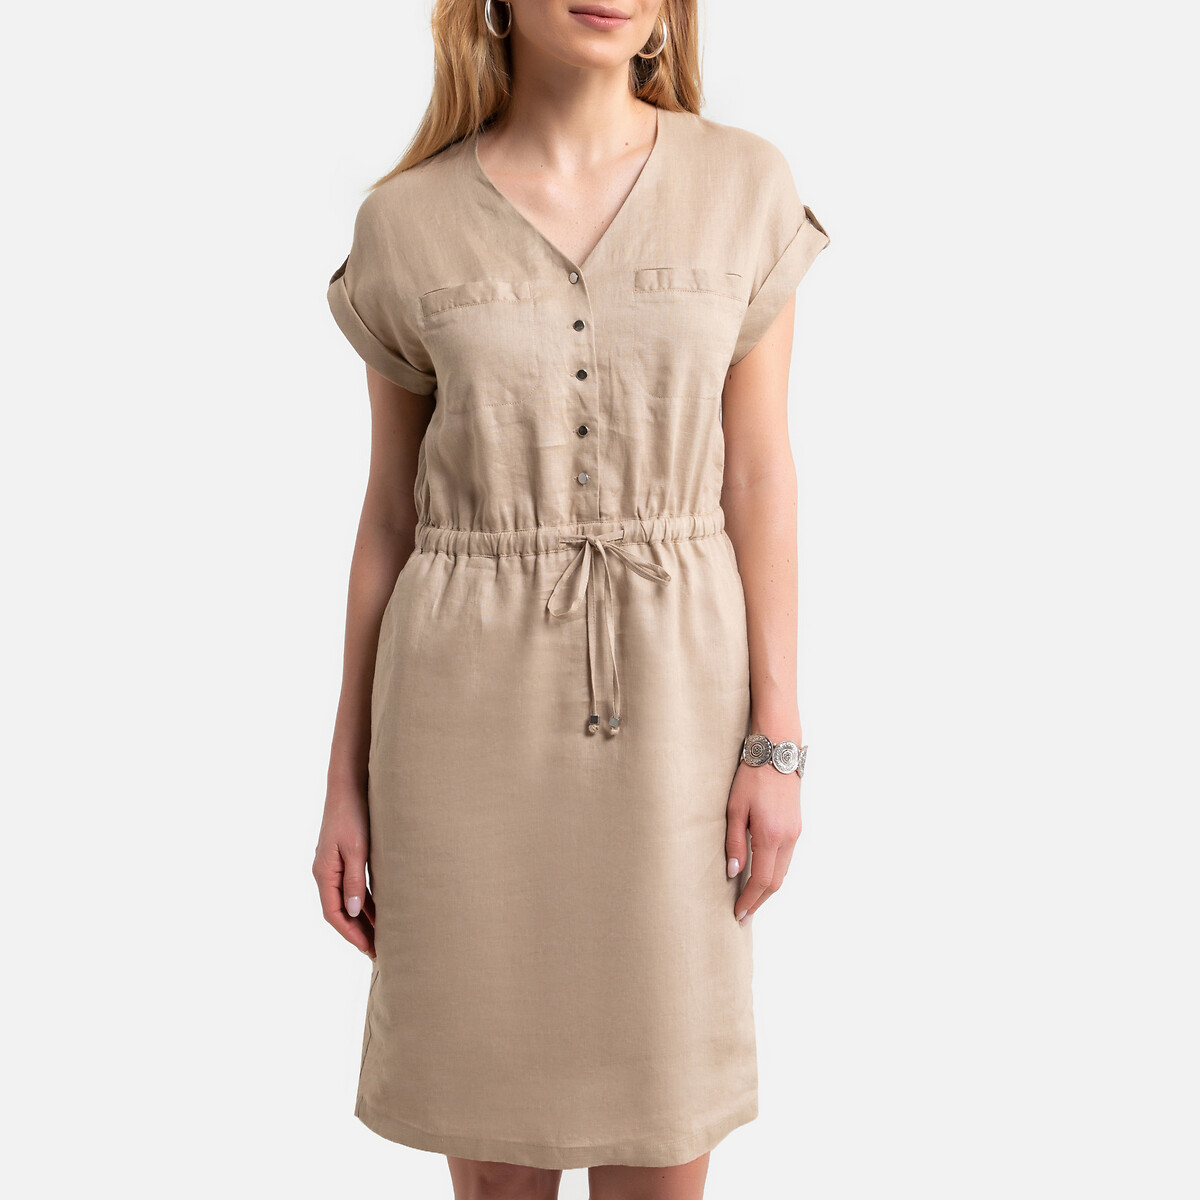 Starpromise Dresses for Women Casual Summer V-Neck Shift Daily Splice Pockets Button Plain Cotton 